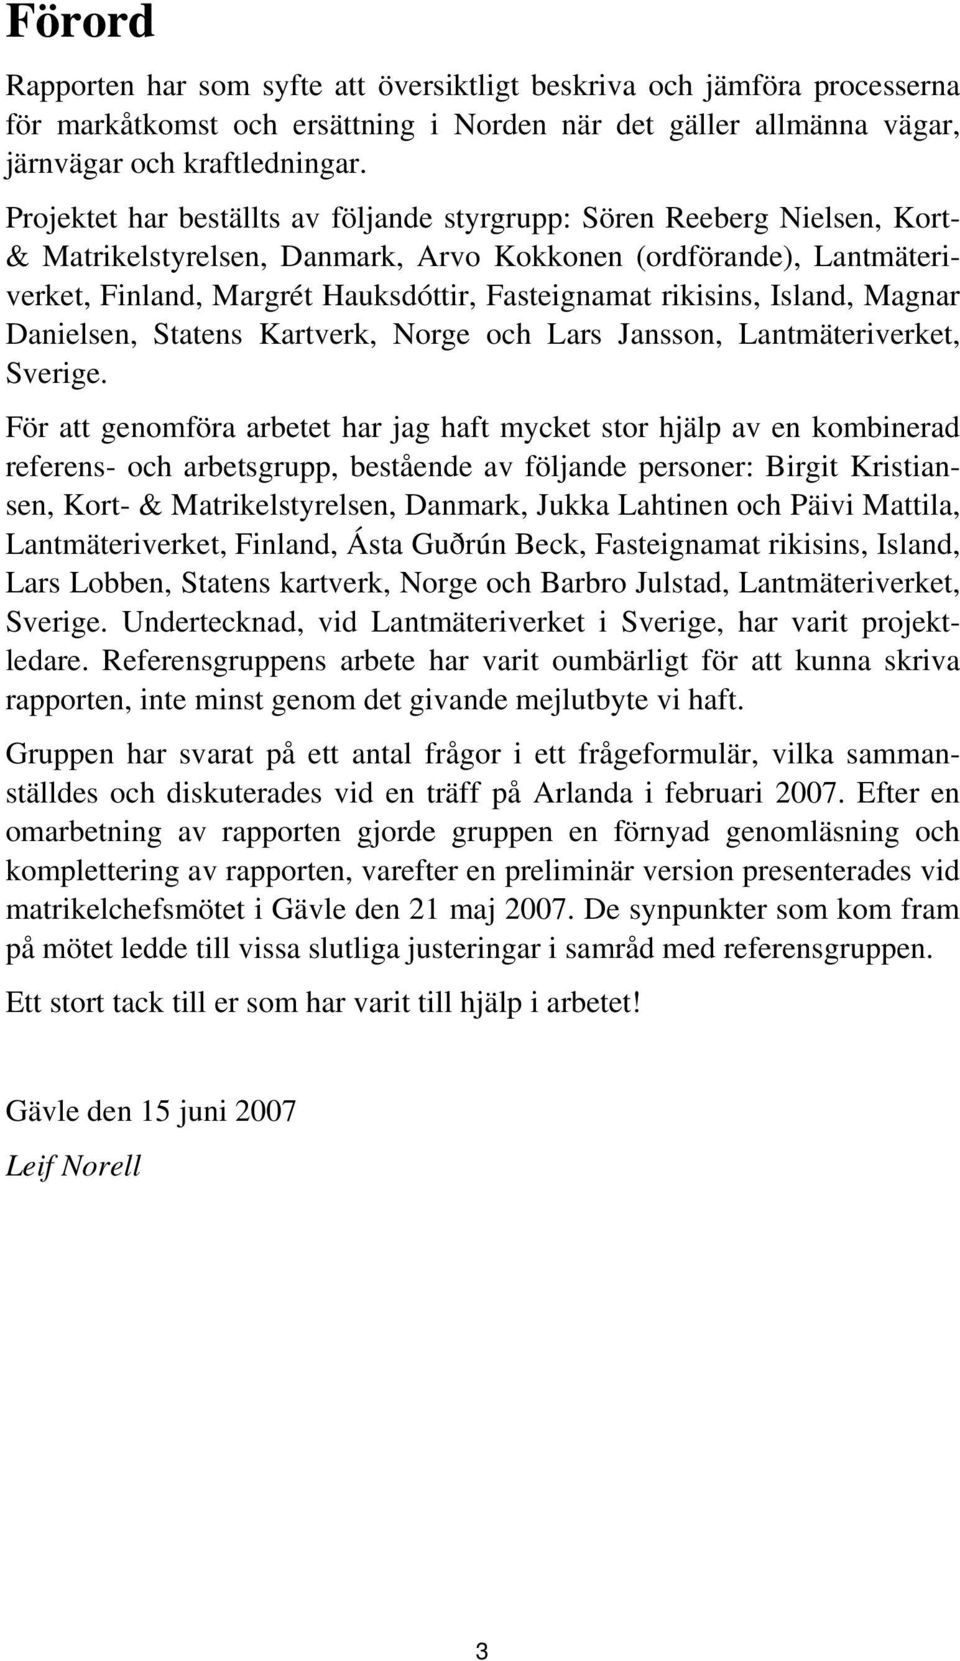 rikisins, Island, Magnar Danielsen, Statens Kartverk, Norge och Lars Jansson, Lantmäteriverket, Sverige.